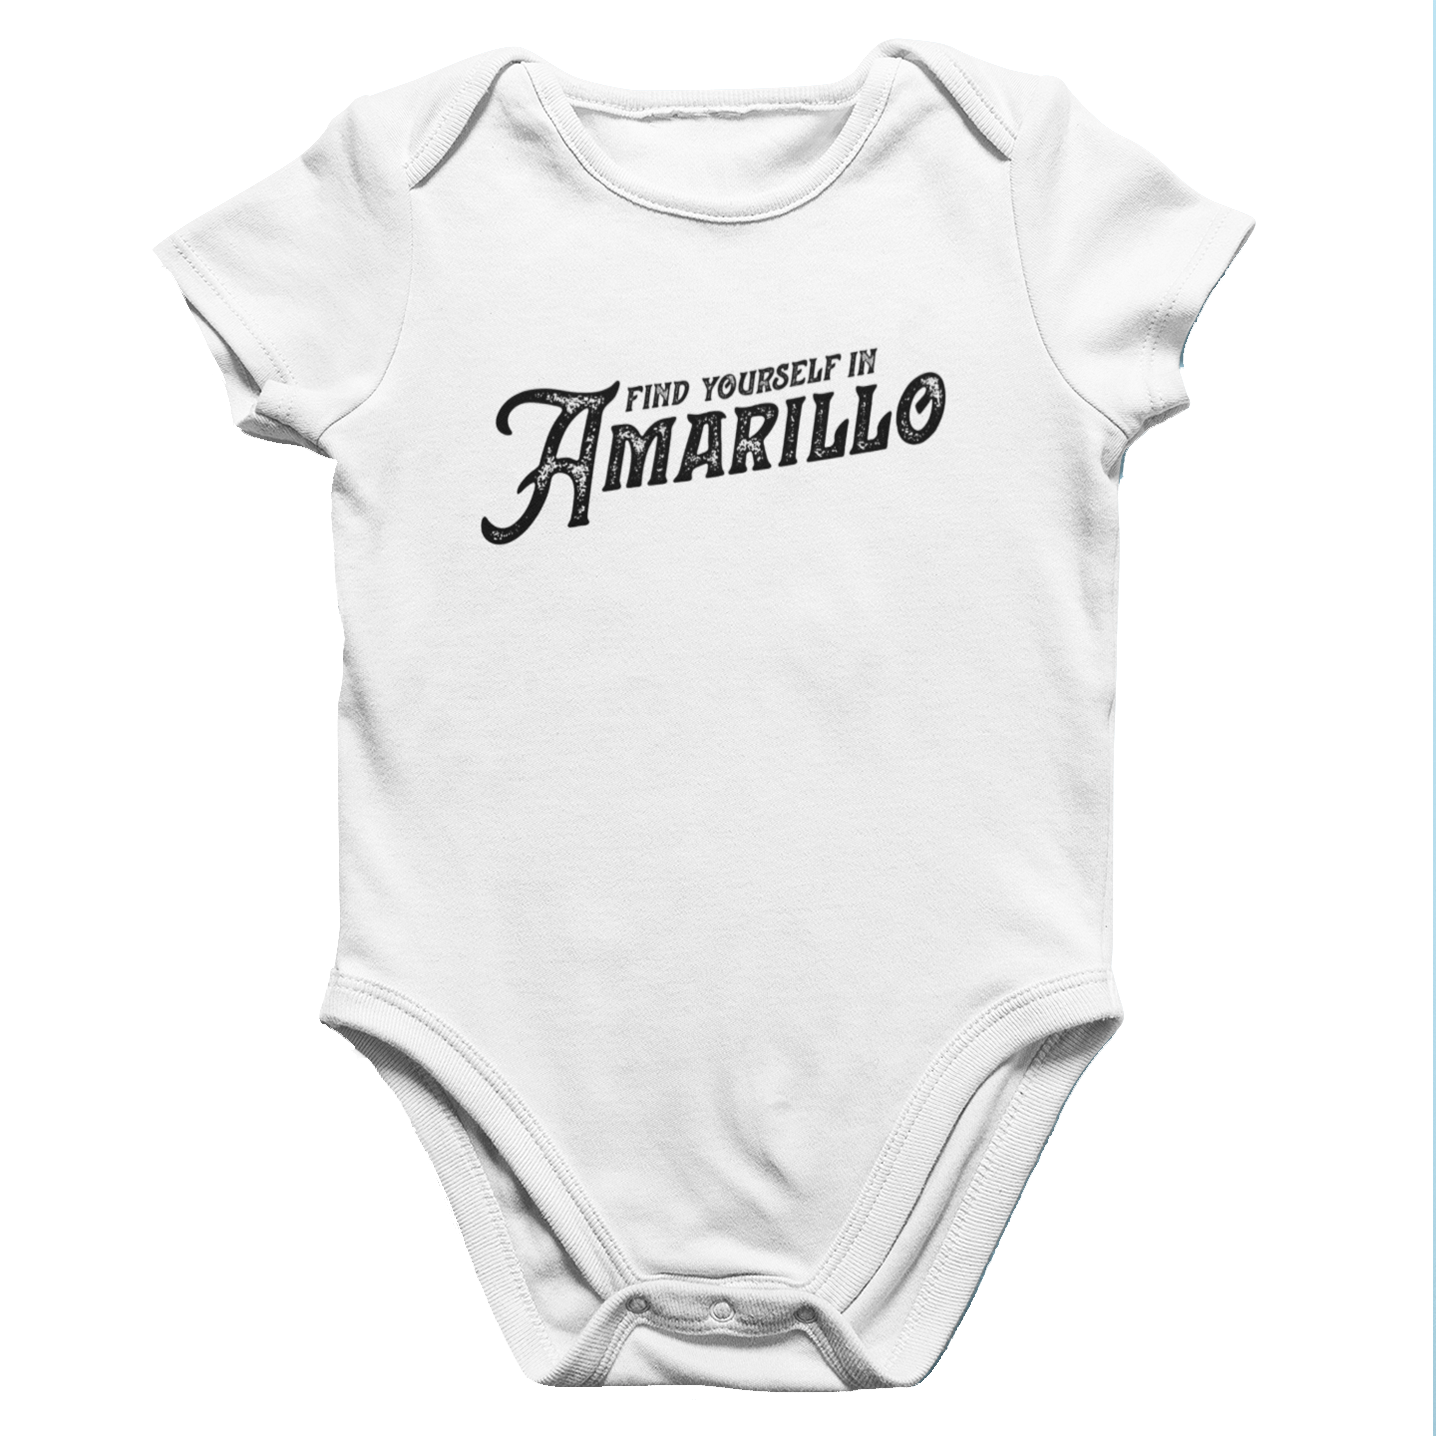 Amarillo Texas Infant Onesie - Find Yourself